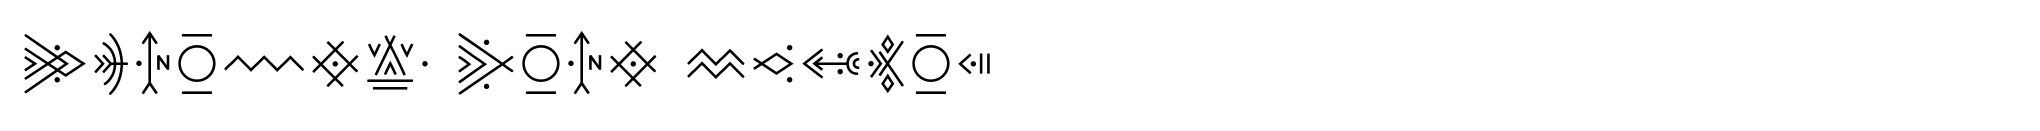 Agnostic Font Symbol image